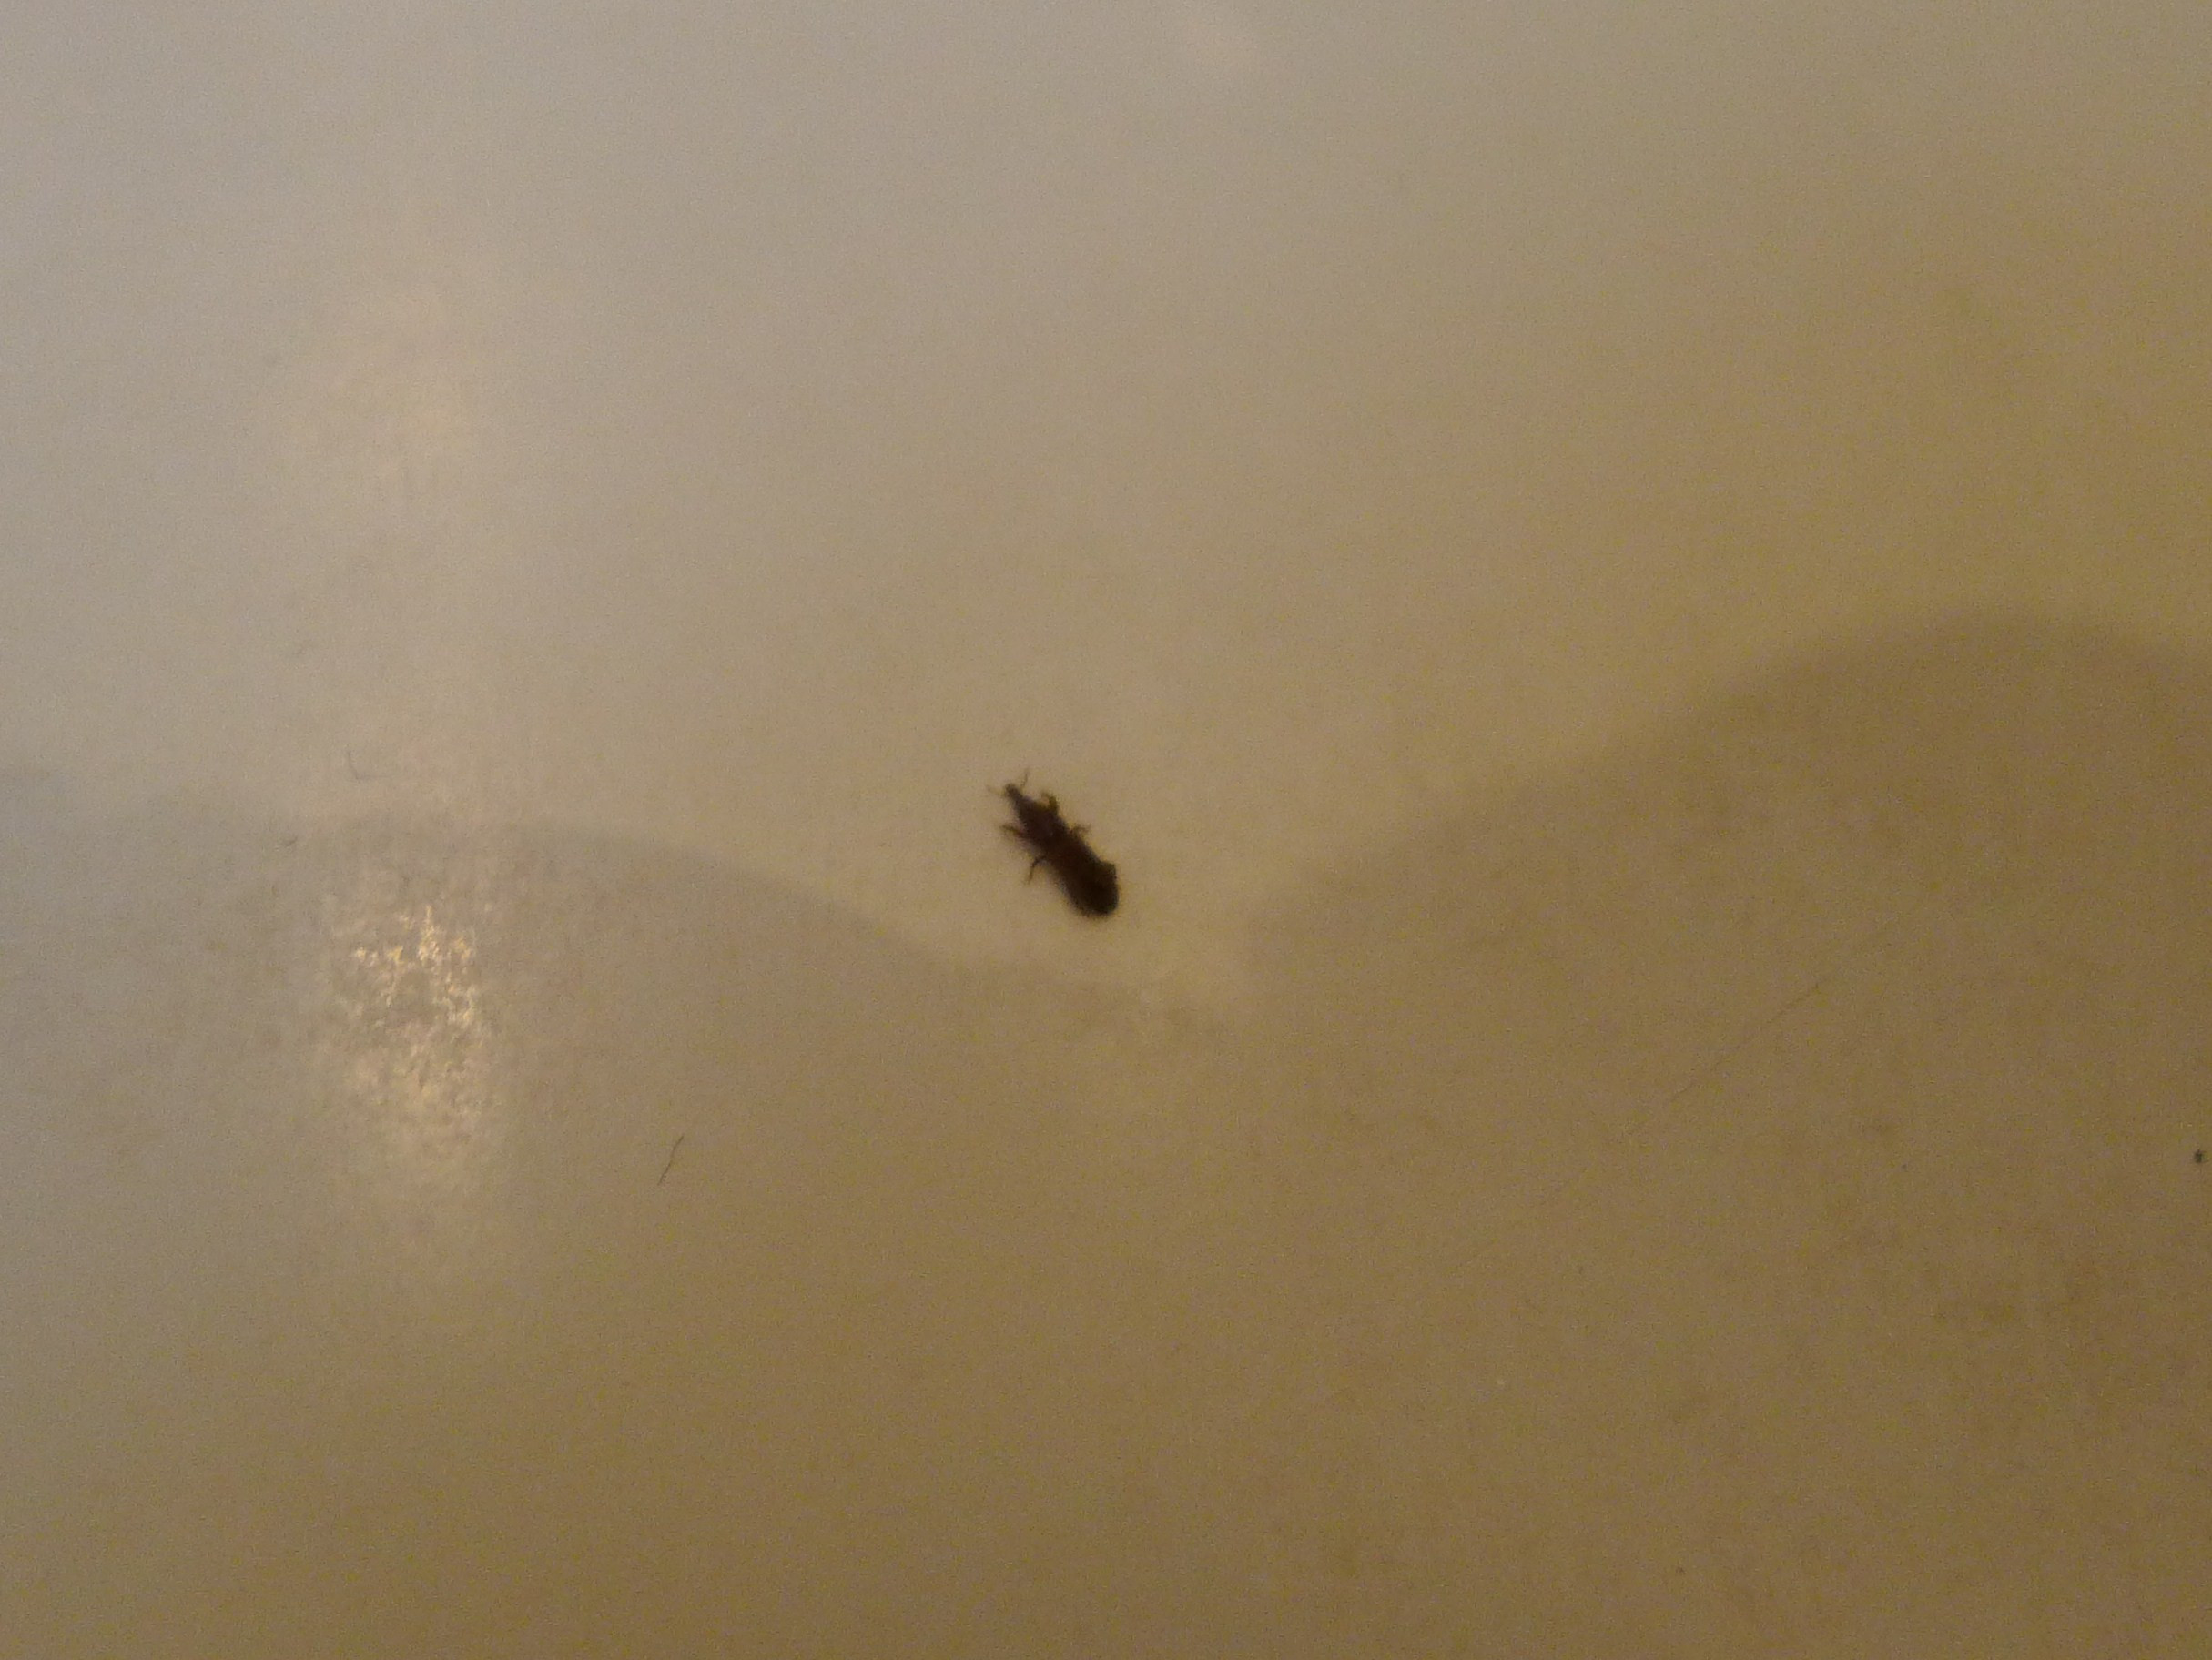 Tiny Bugs In Bathroom Sink
 Getting Rid Get Rid Springtails In Tub bedbugs